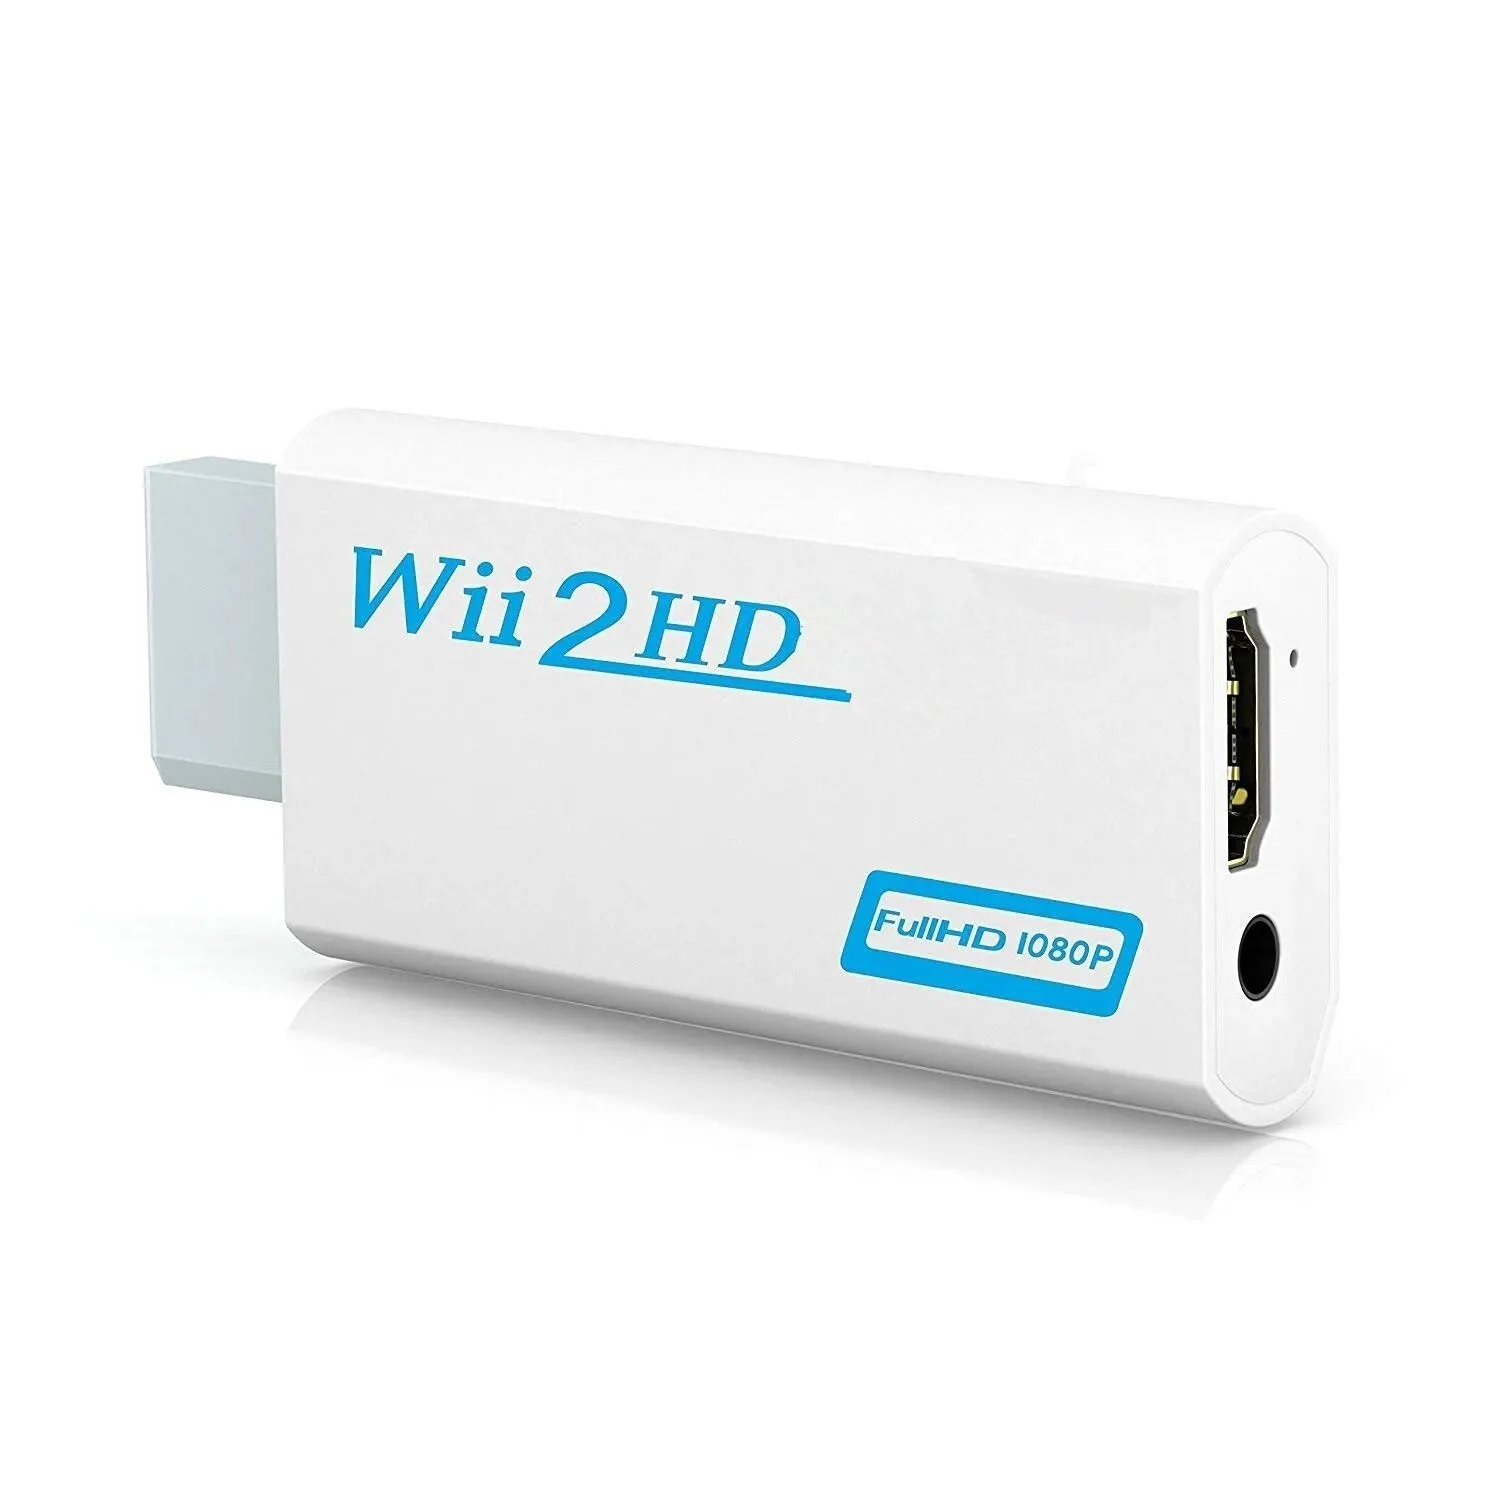 Совместимый конвертер Full HD 1080P Wii в HDMI адаптер конвертер Wii2HDMI 3,5 мм аудио для ПК HDTV монитор дисплей